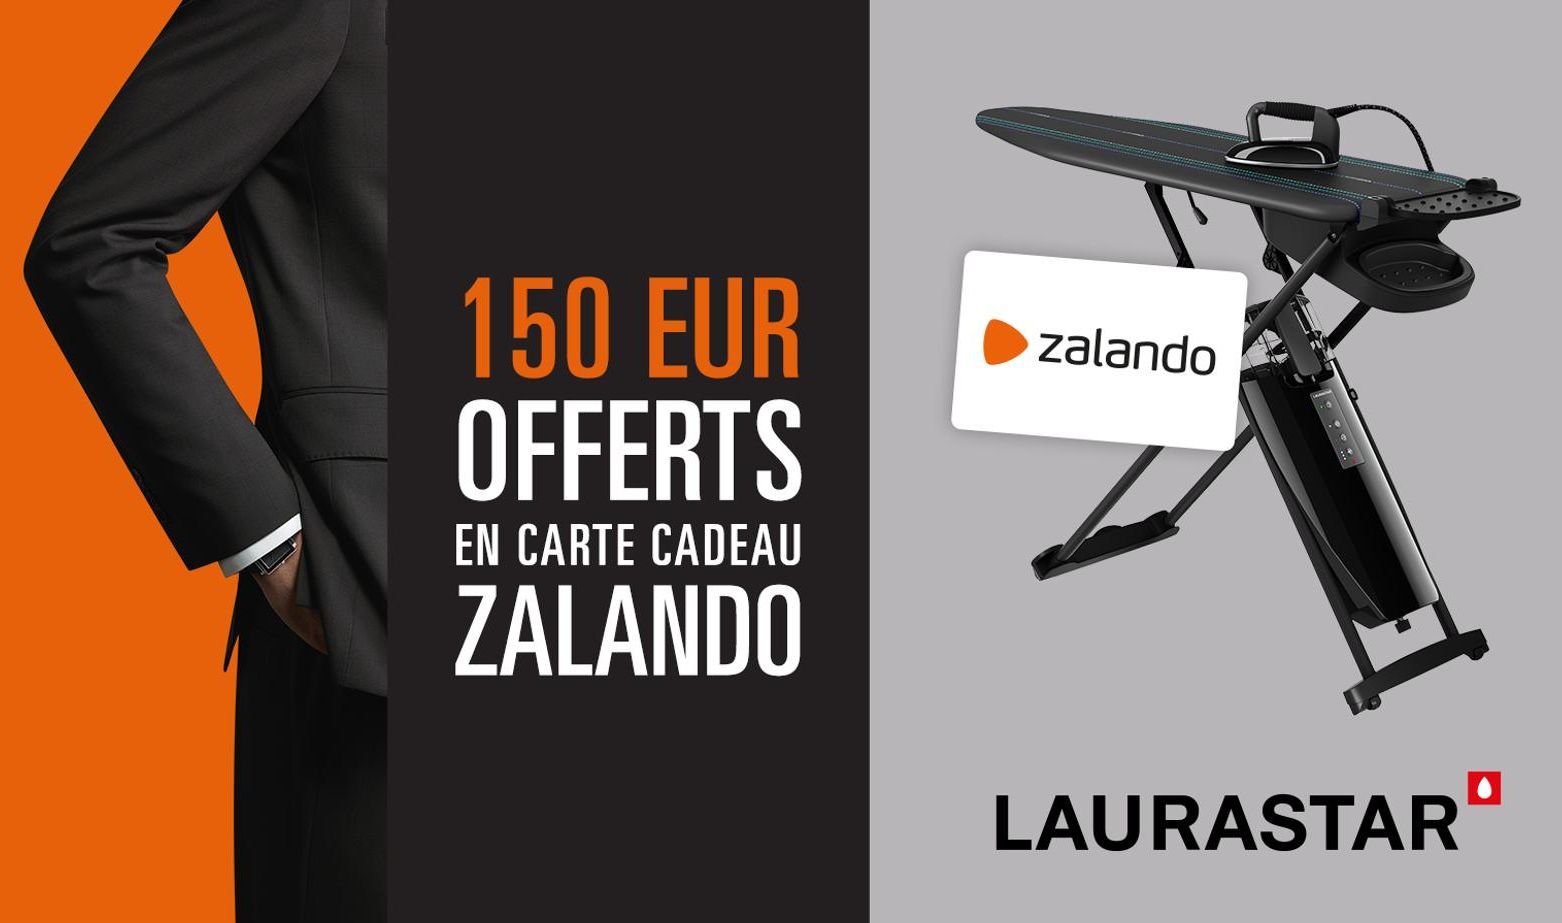 150 EUR OFFERTS  EN CARTE CADEAU  ZALANDO  zalando  LAURASTARⓇ  